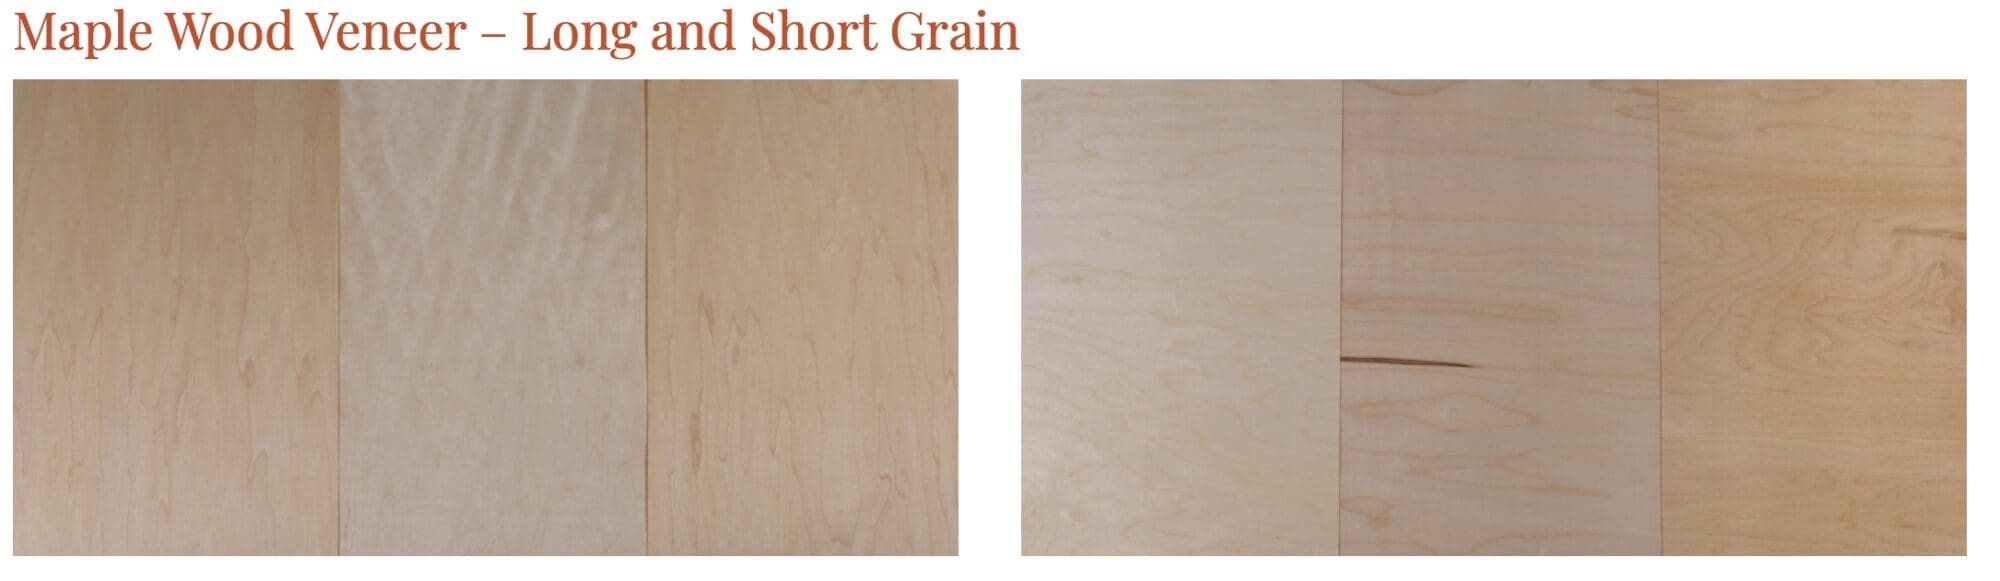 Maple Wood Veneer Long and Short Grain